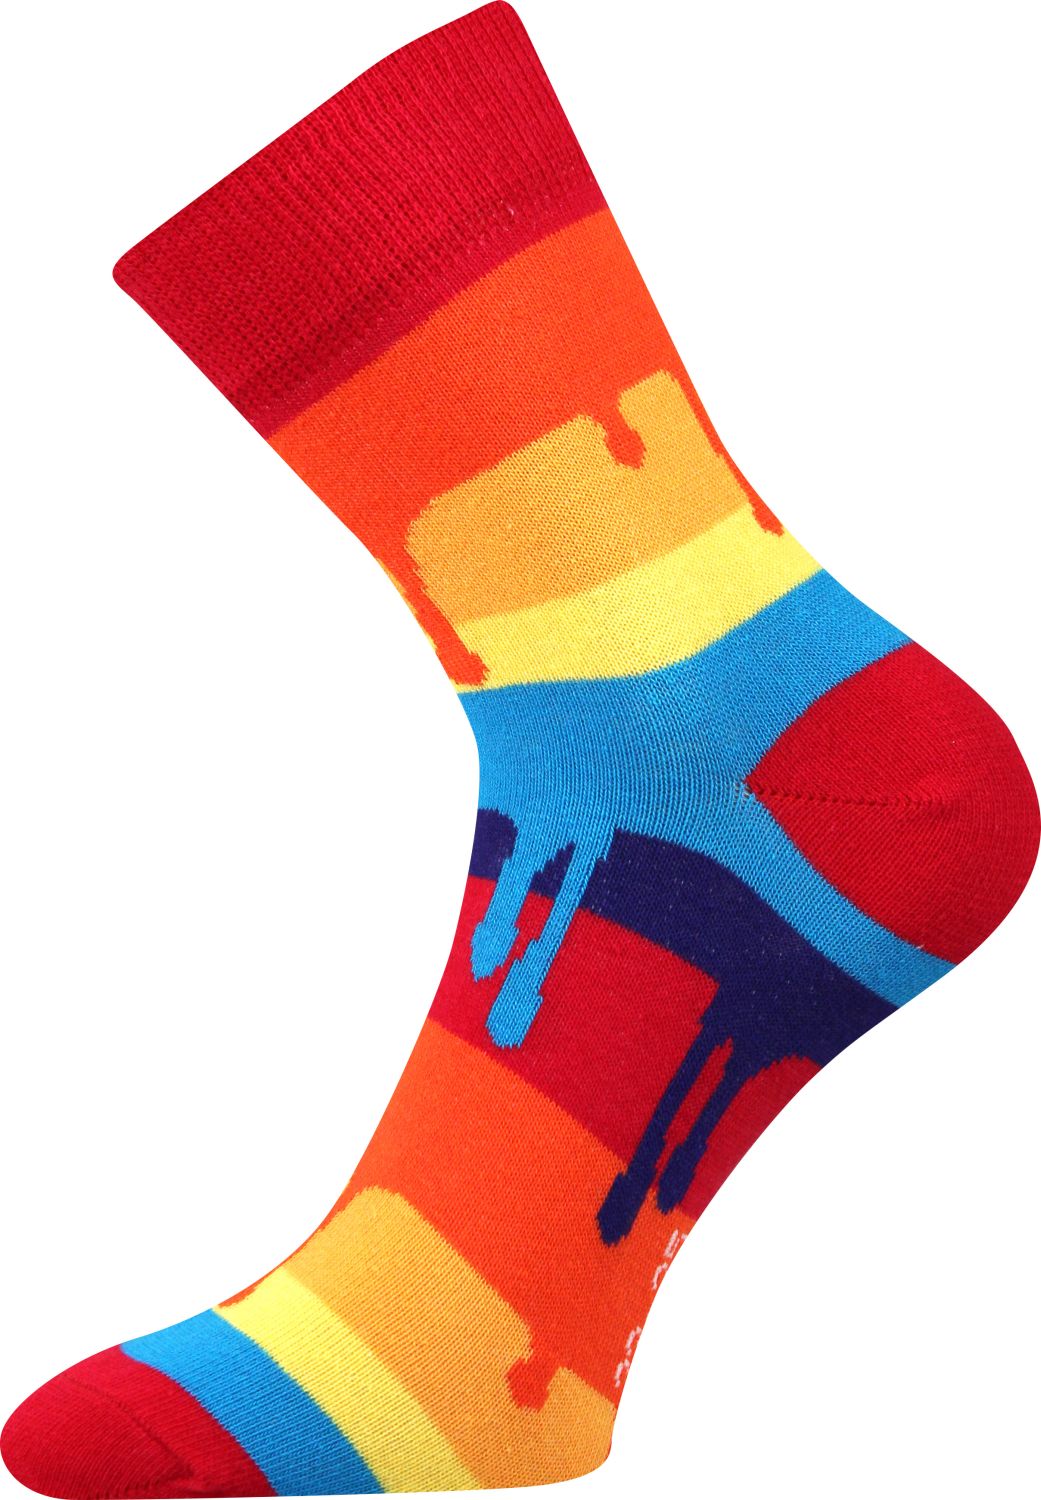 Stylish socks